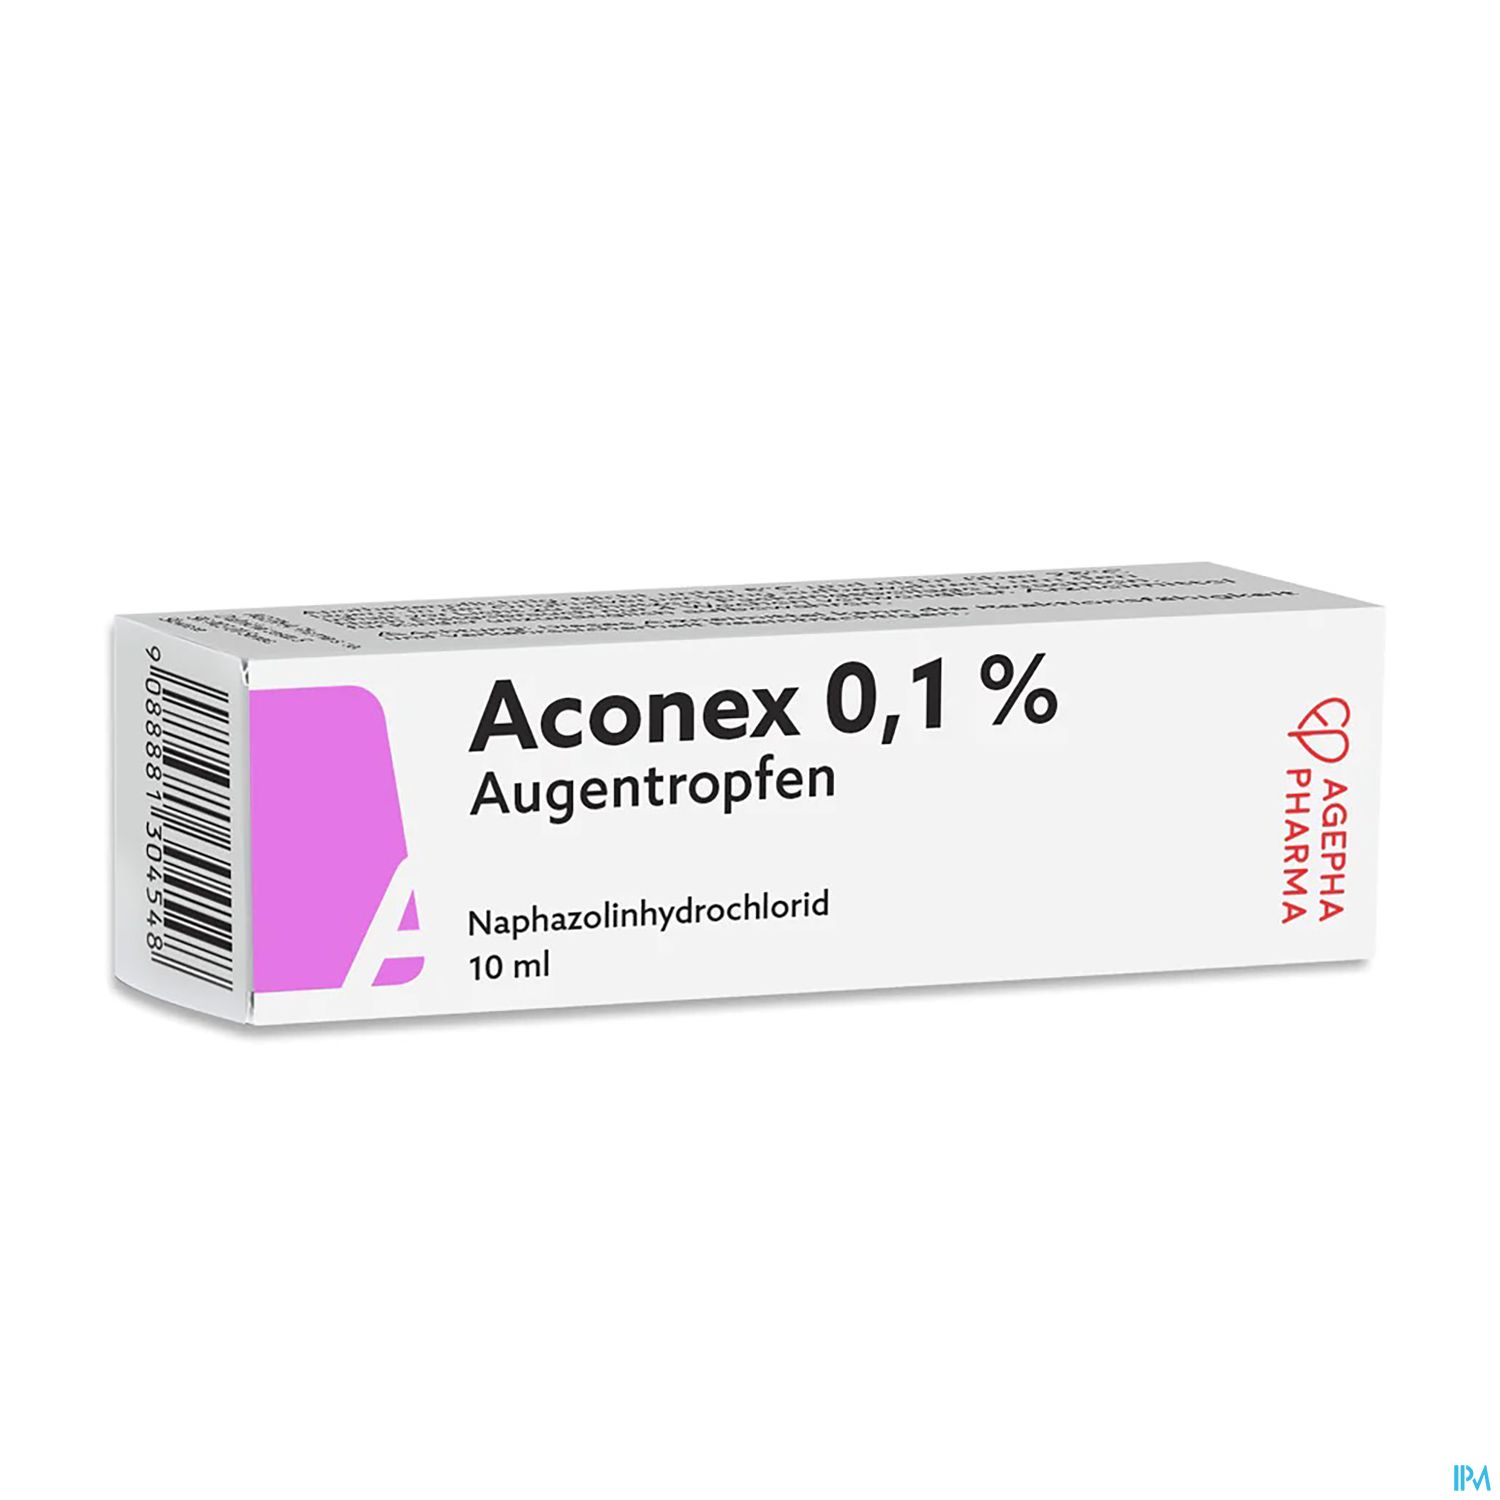 Aconex 0,1% - Augentropfen